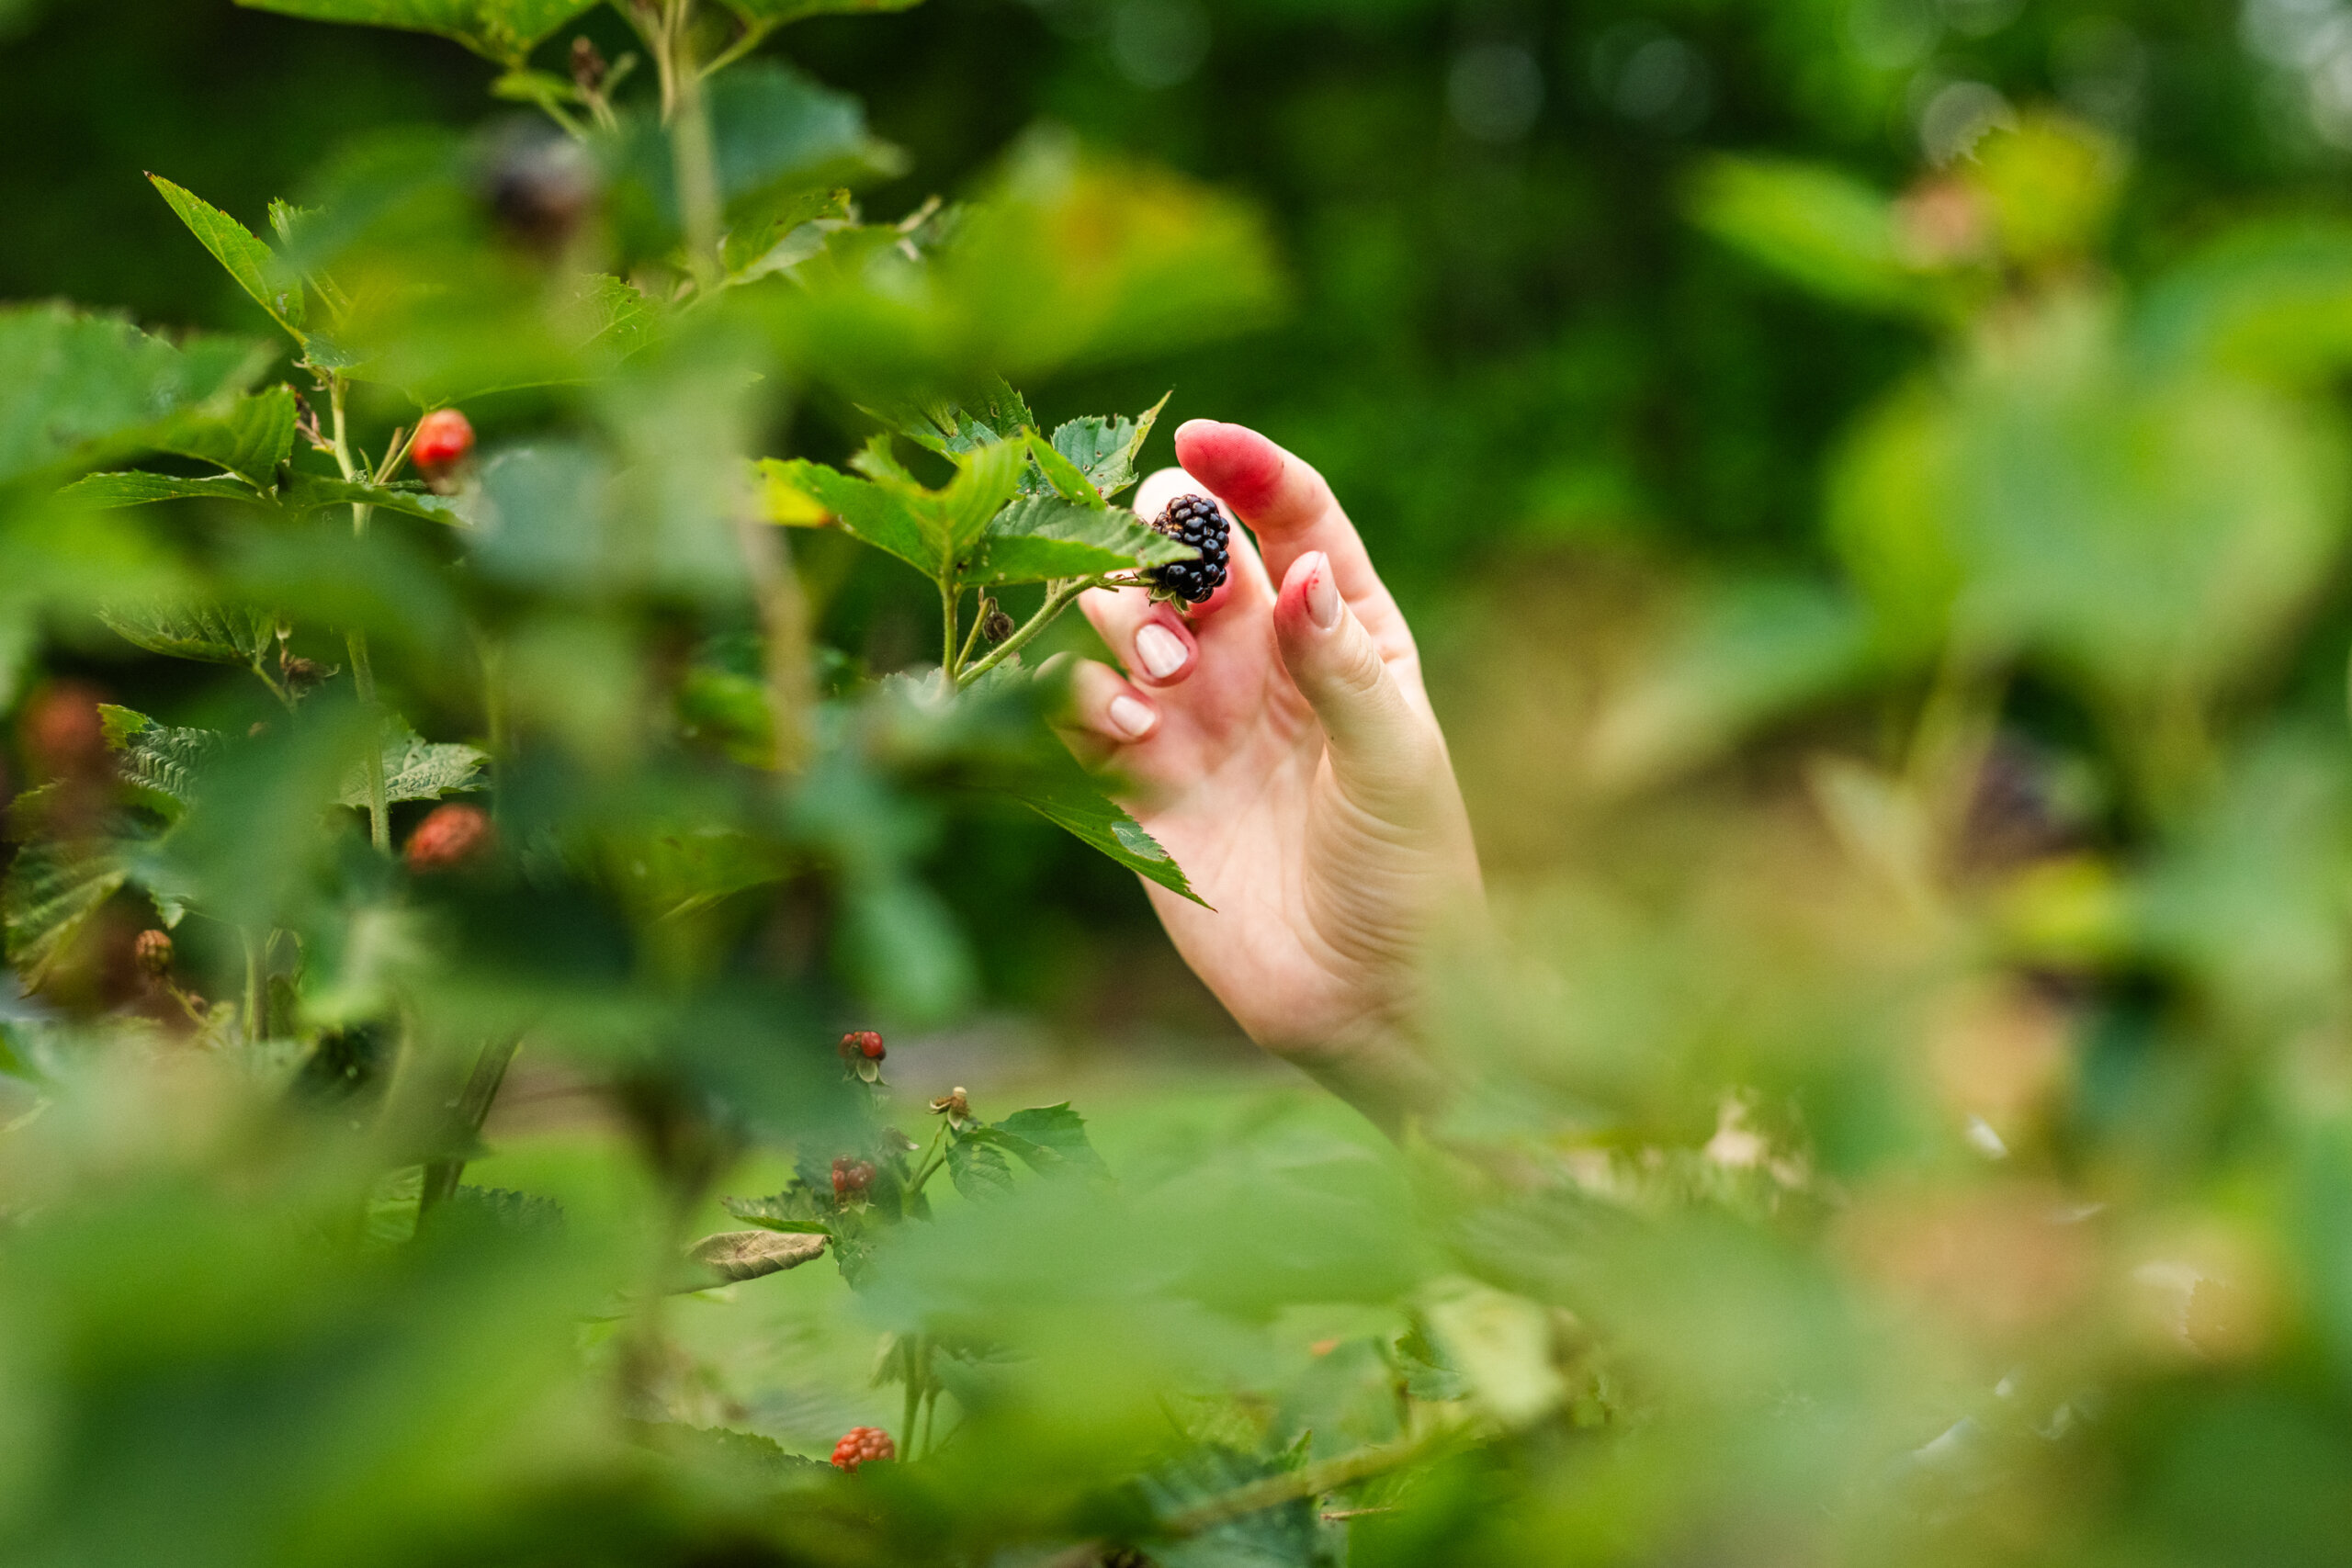 Hand reaching through foliage to pick a ripe blackberry.